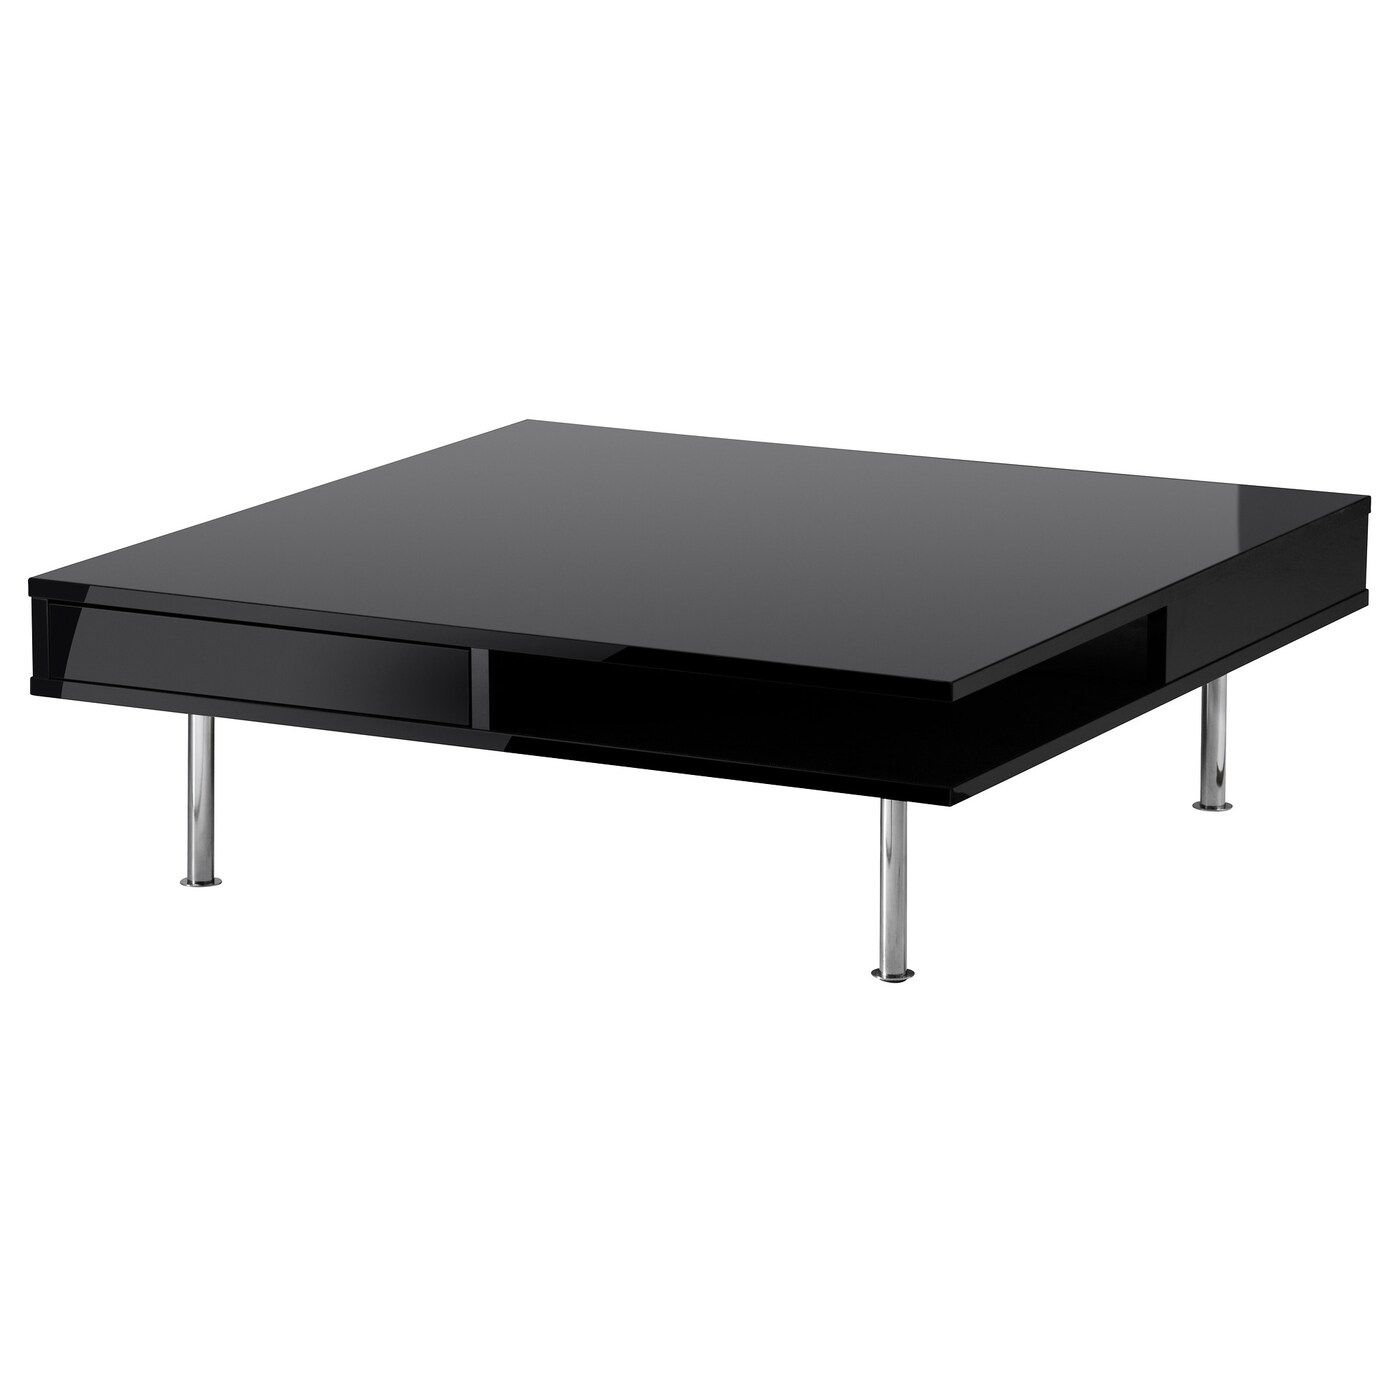 Tofteryd Coffee Table, High Gloss Black, 95x95 Cm – Ikea Intended For High Gloss Black Coffee Tables (View 9 of 20)